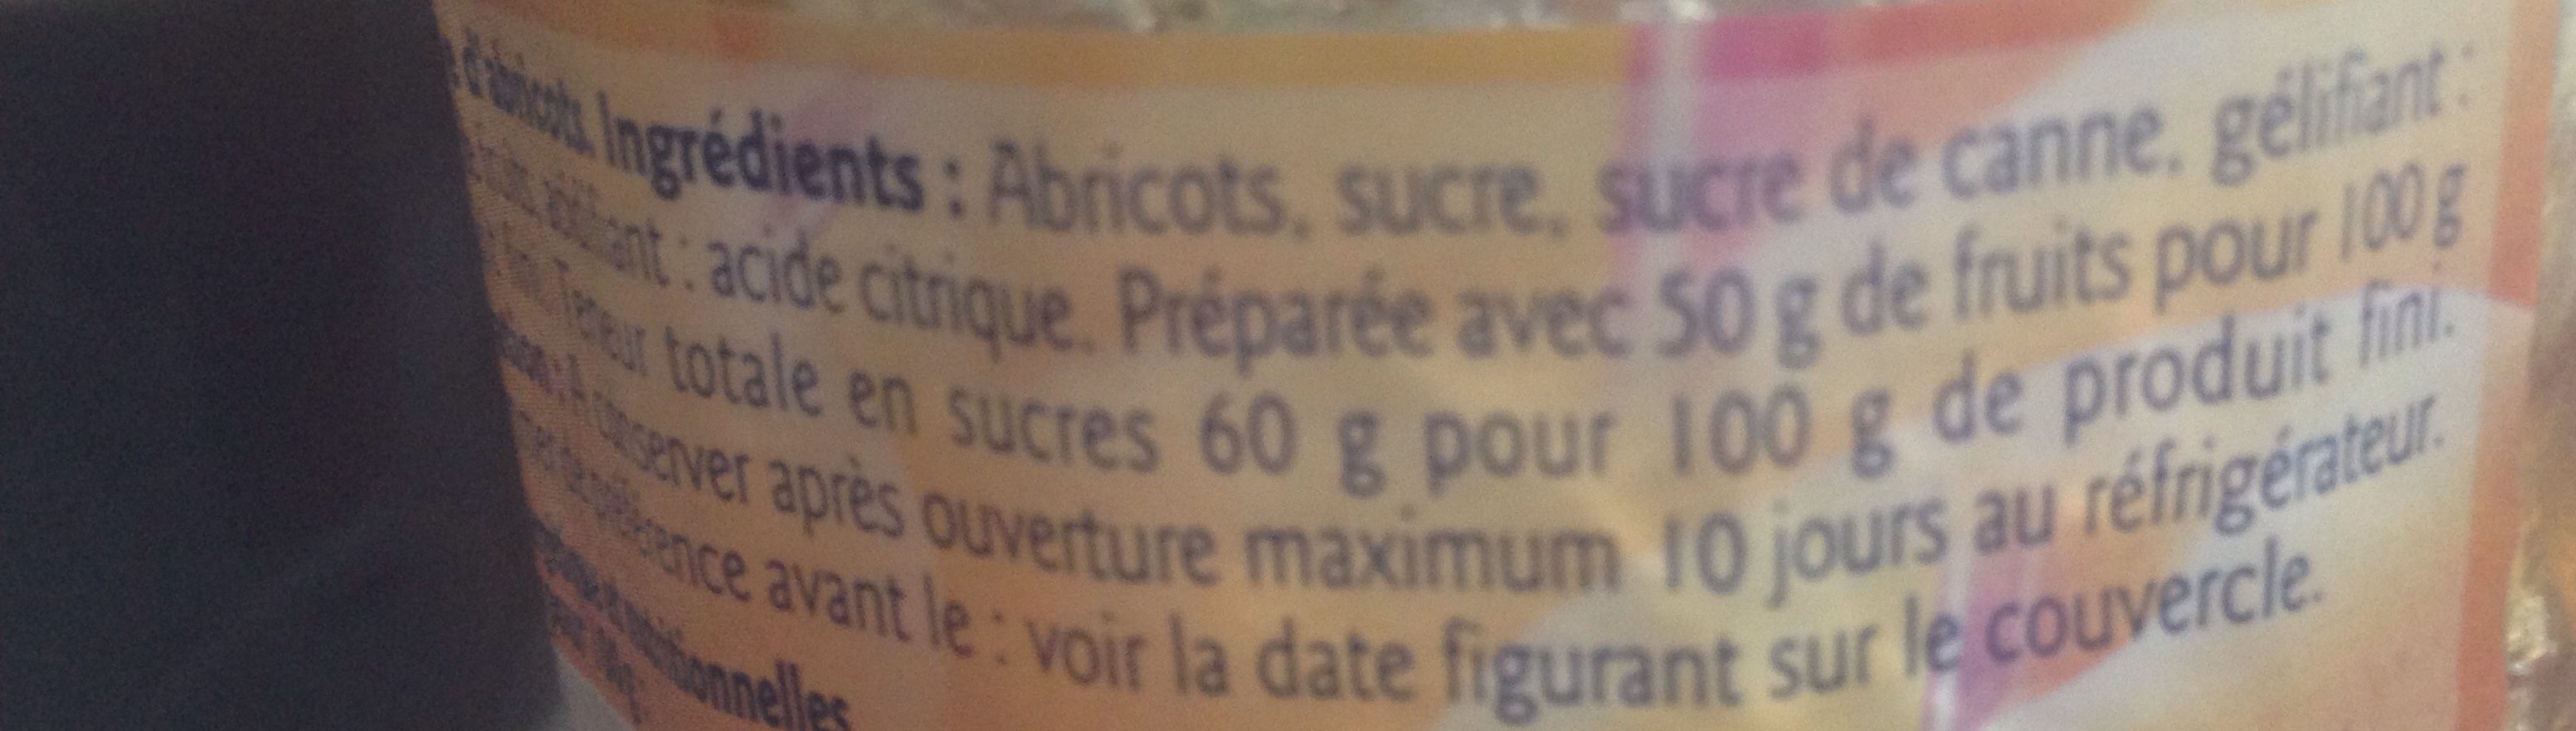 Confiture Abricots - Ingredients - fr